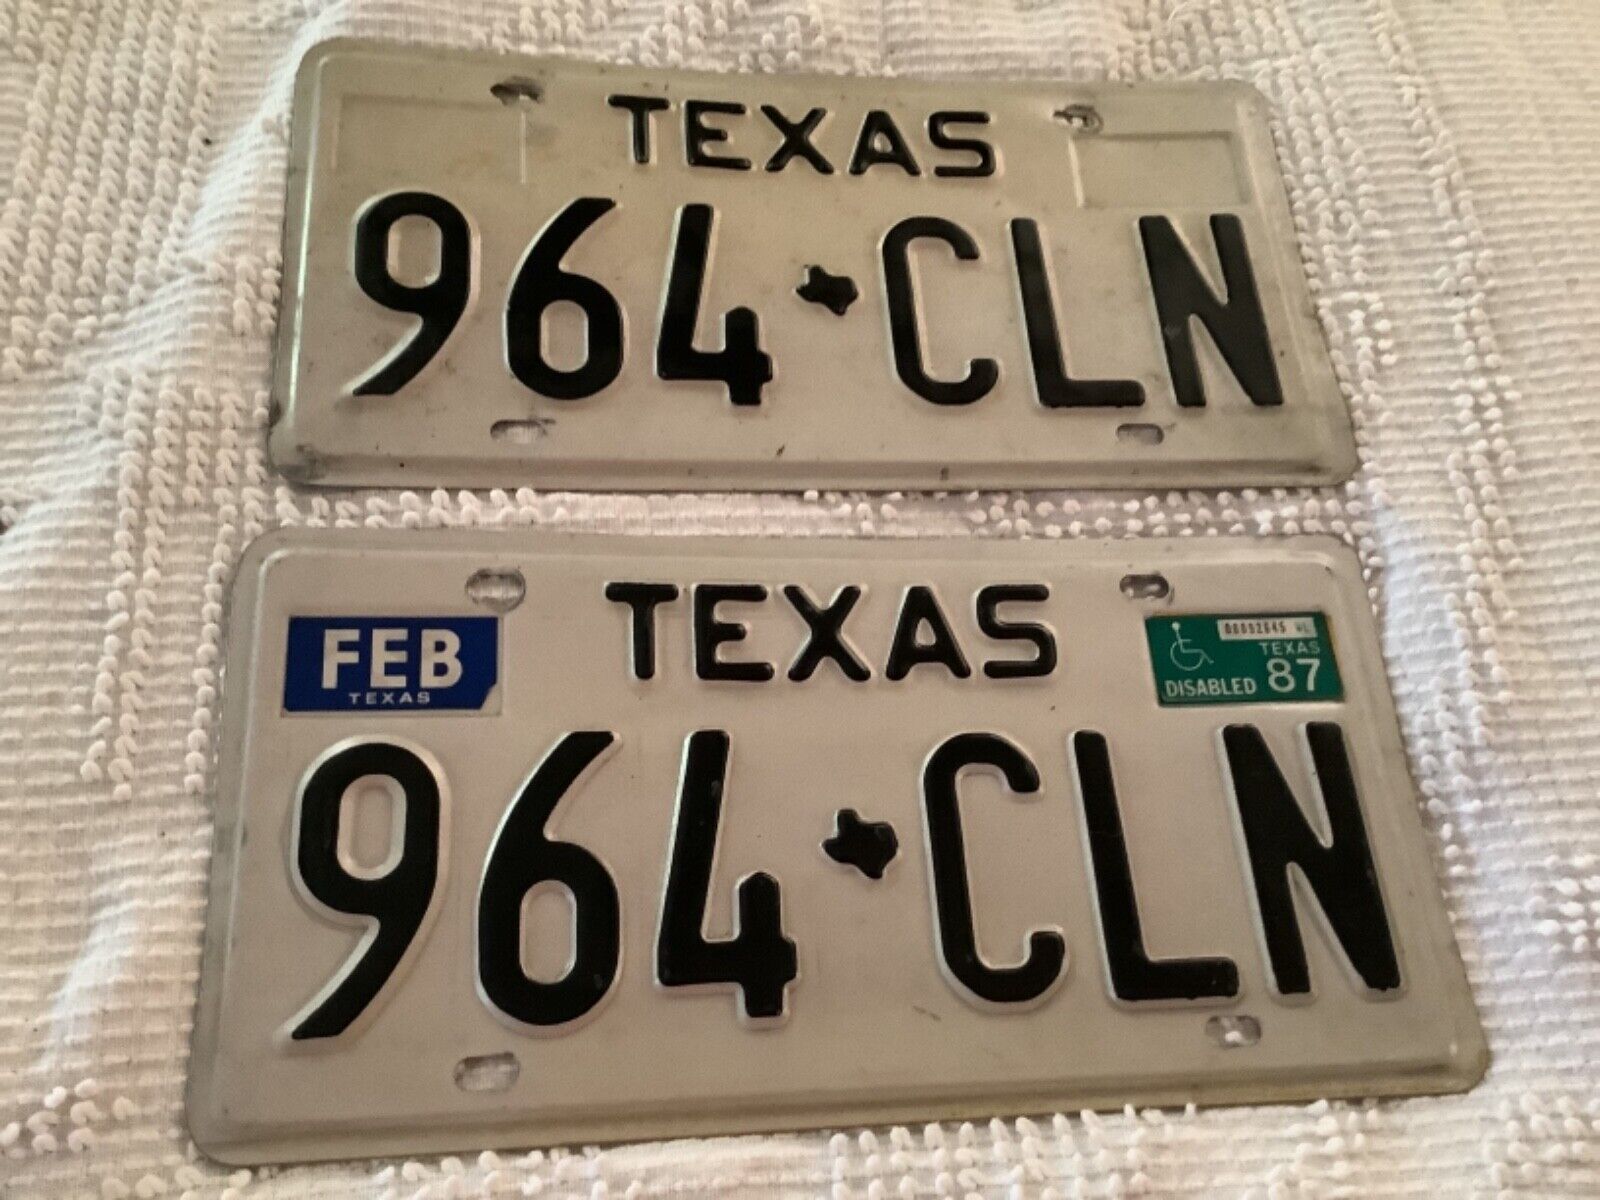 Vintage 1987 1980’s Texas License Plates matching pair 964 cln